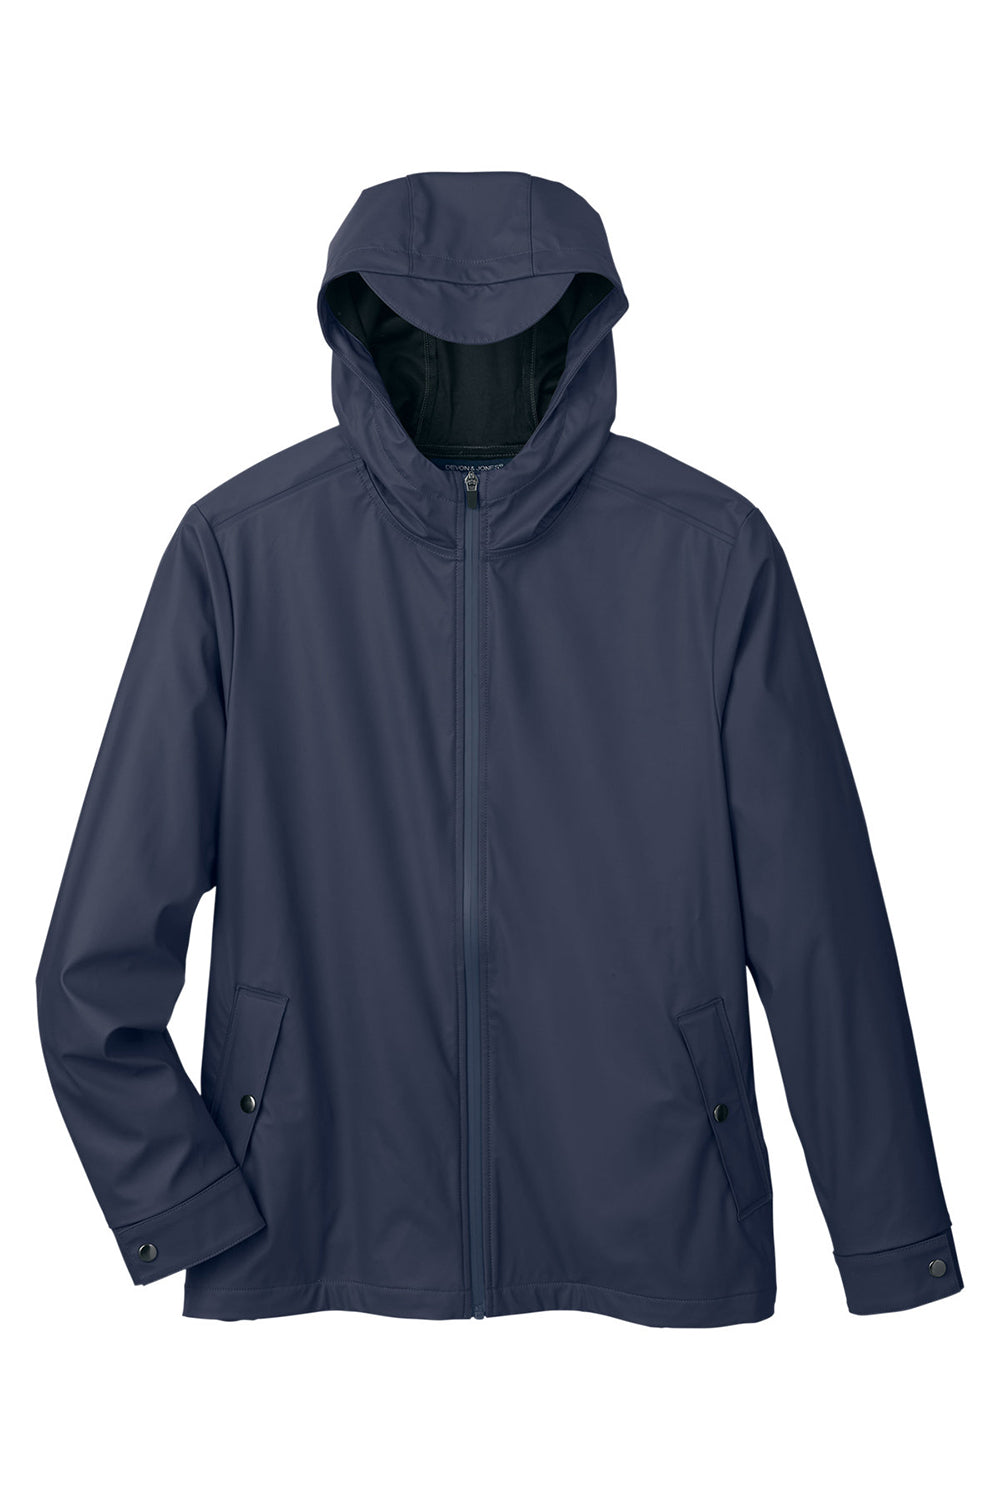 Devon & Jones DG720 Mens New Classics Prescott Full Zip Hooded Rain Jacket Navy Blue Flat Front